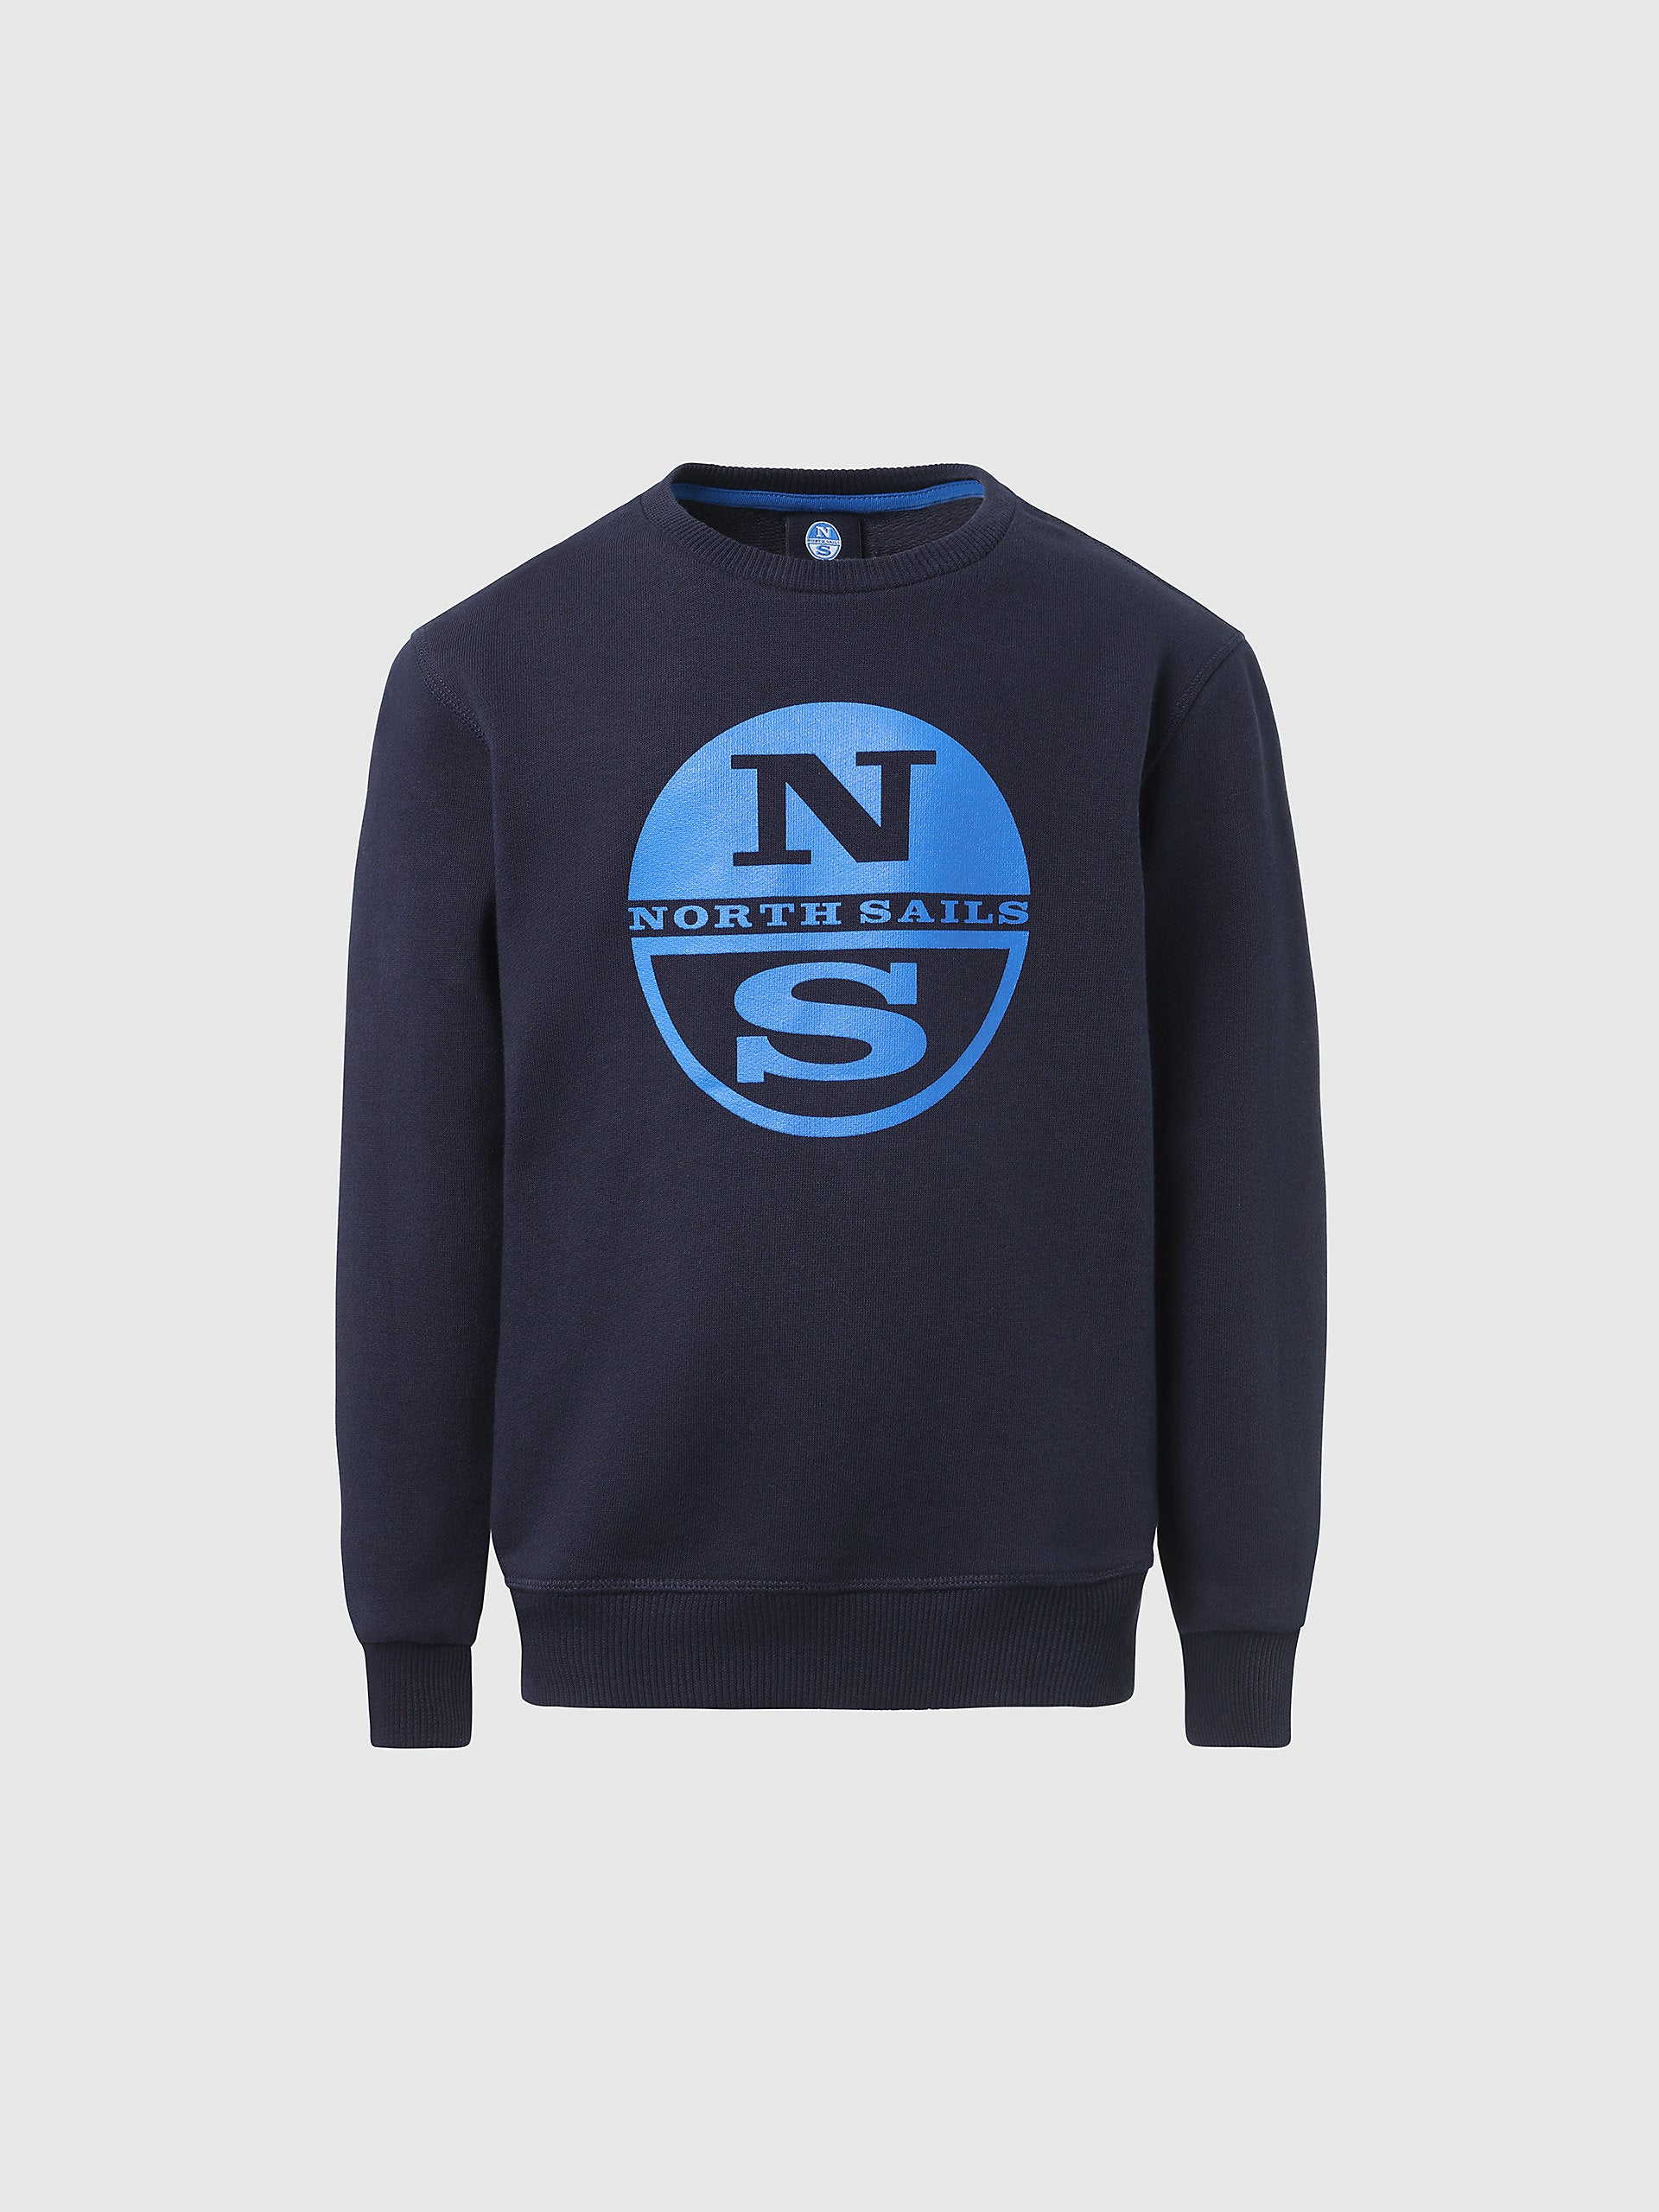 North Sails - Felpa con logoNorth SailsNavy blue14